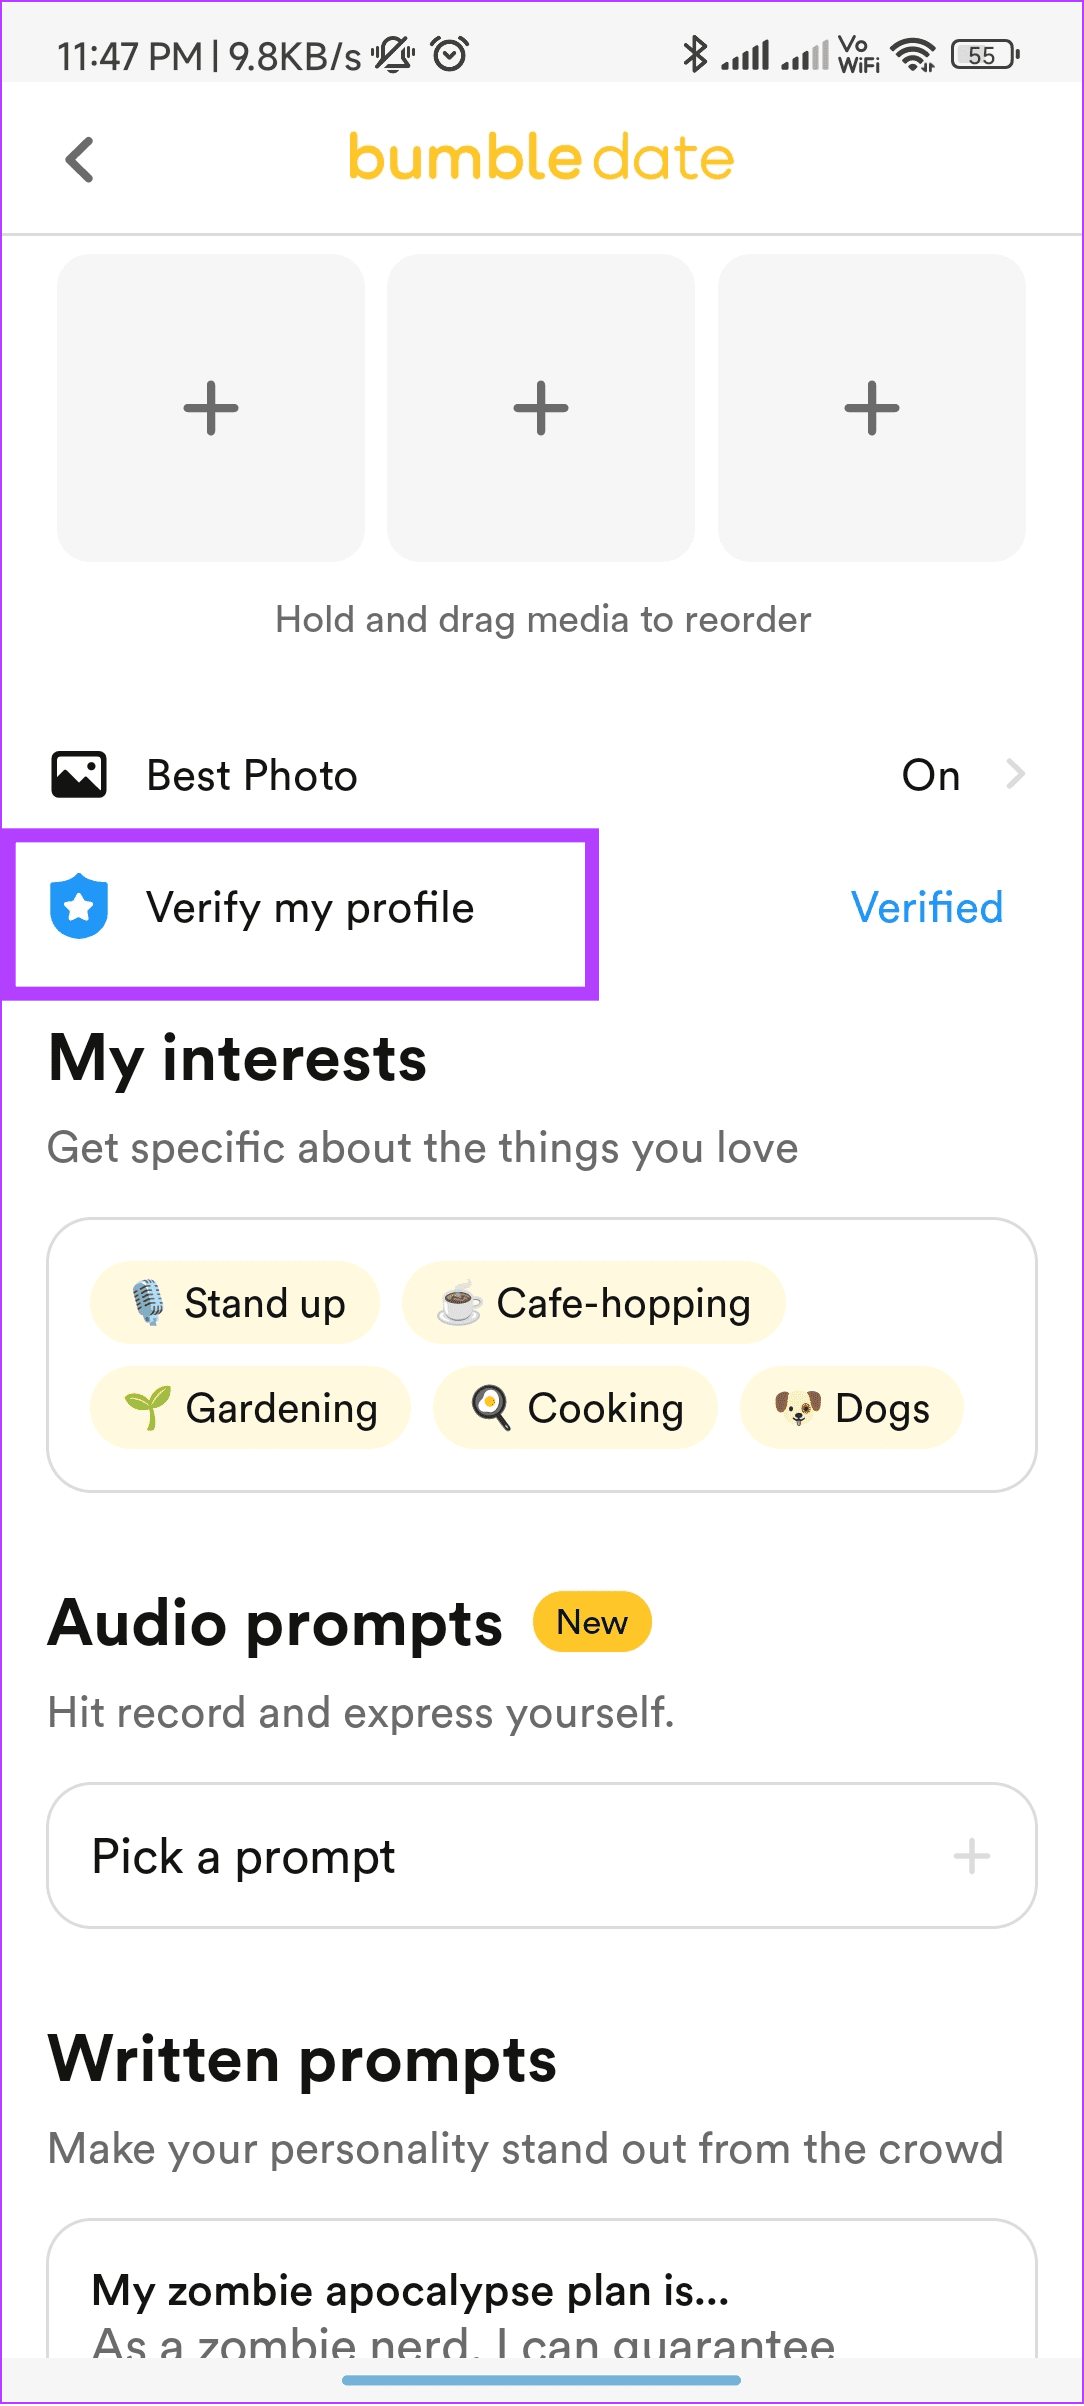 tap verify my profile